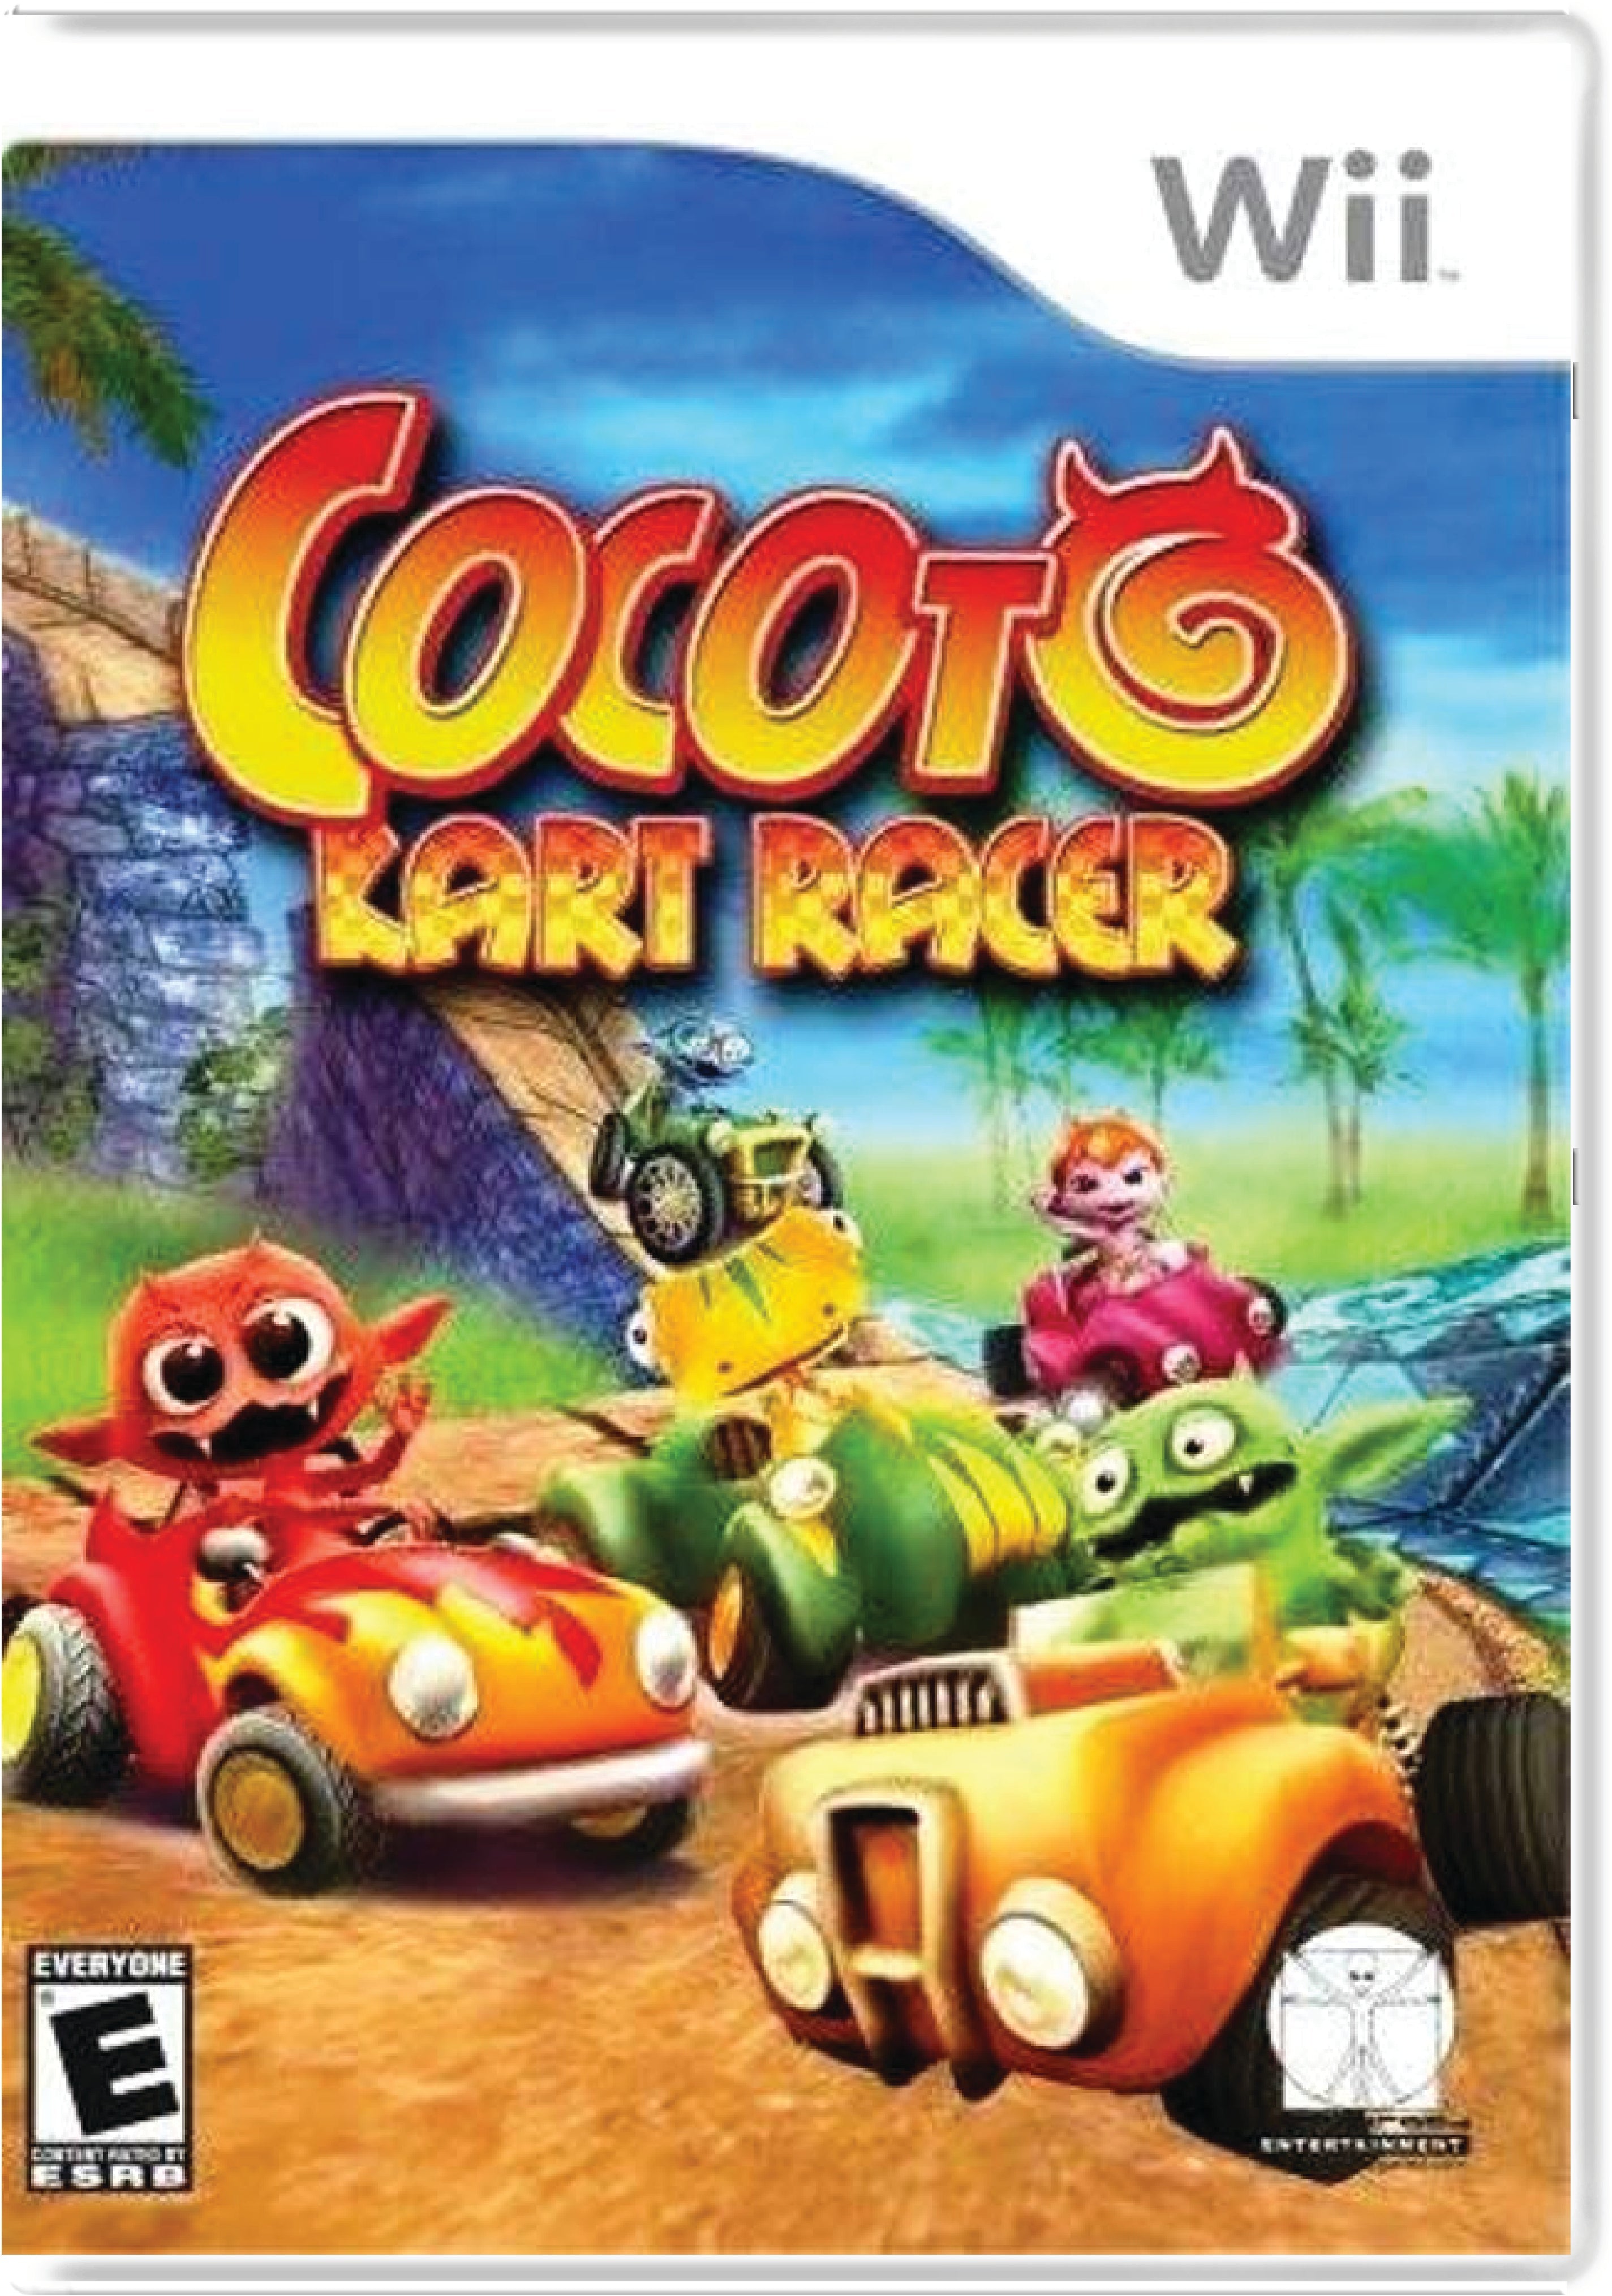 Cocoto Kart Racer Cover Art